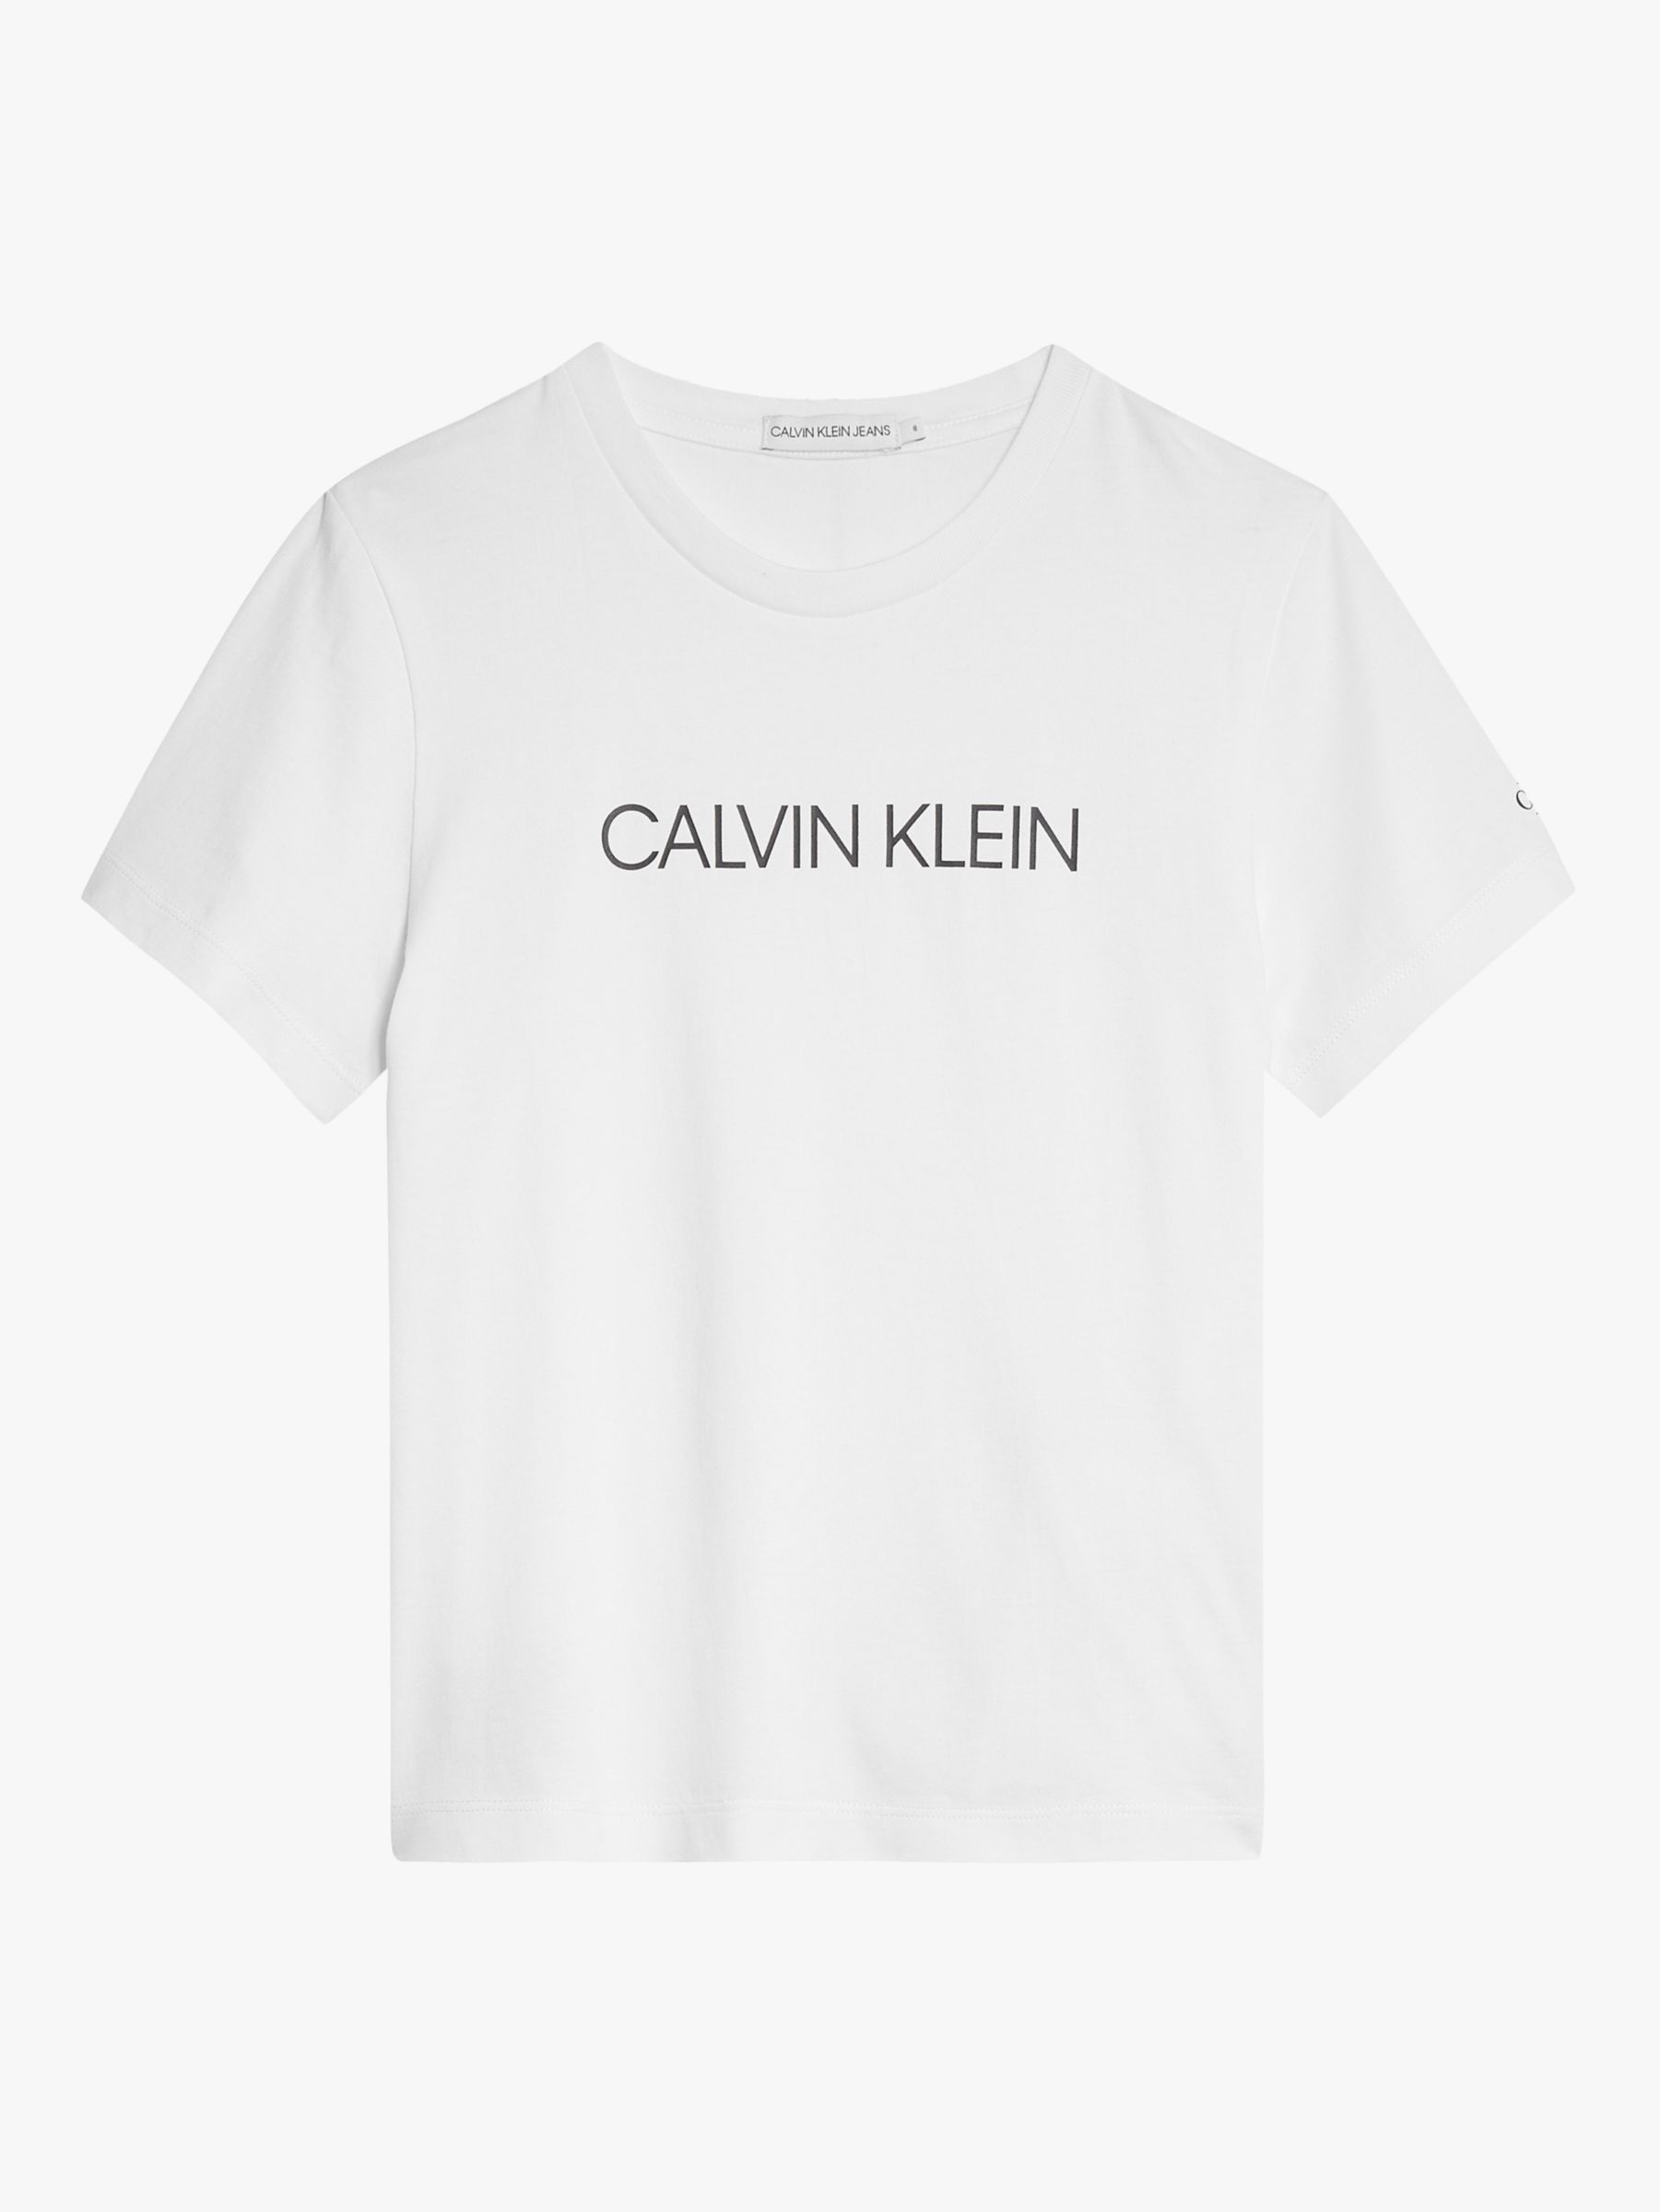 Calvin Klein Kids' Institutional T-Shirt, Bright White at John Lewis ...